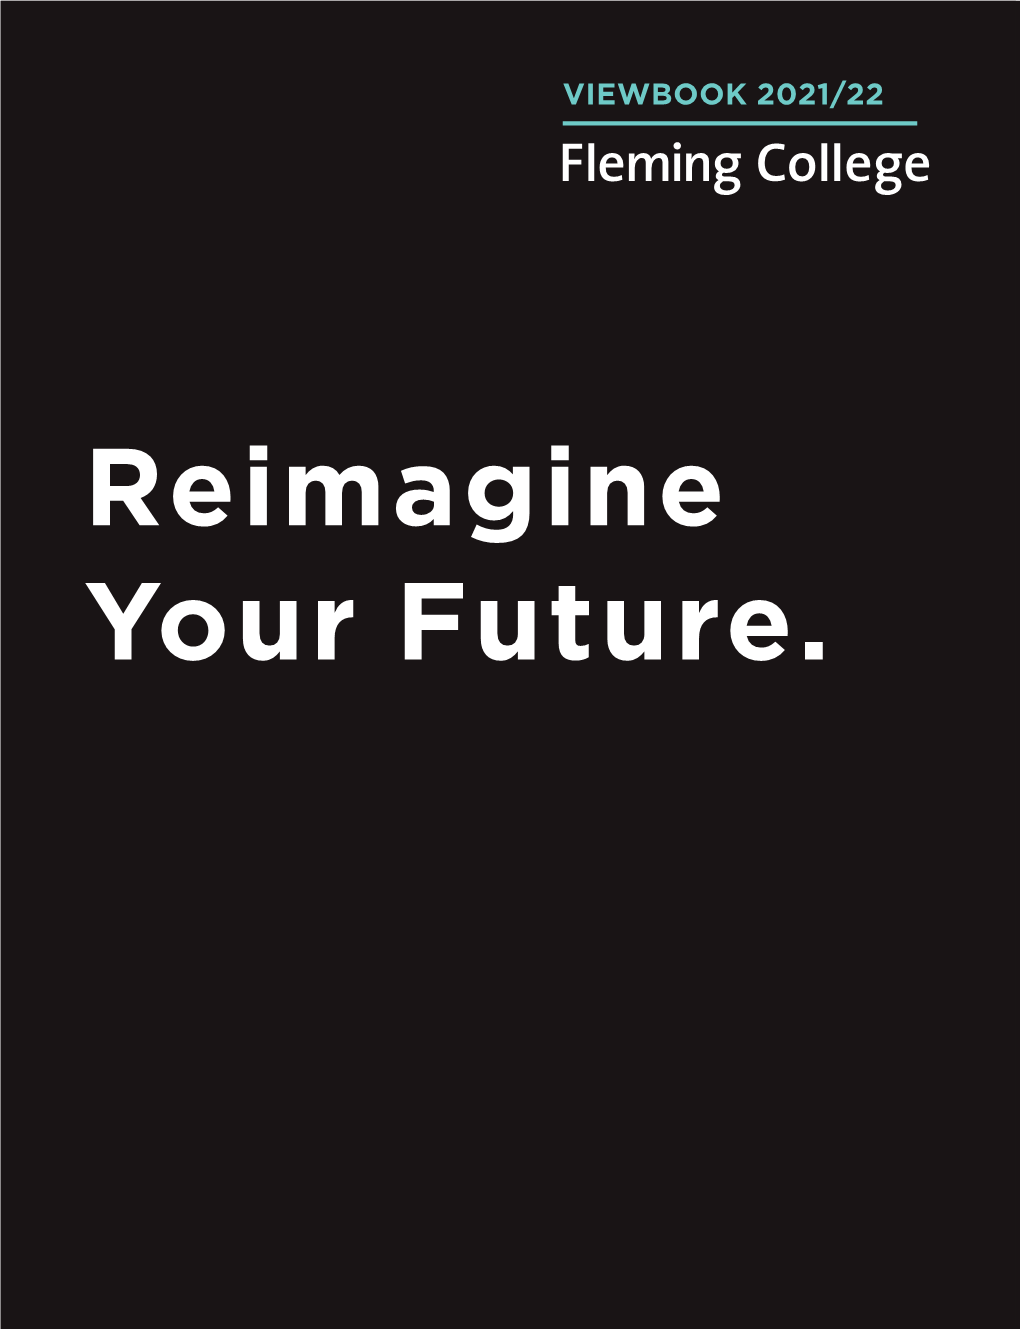 Fleming College Viewbook 2021, 2022